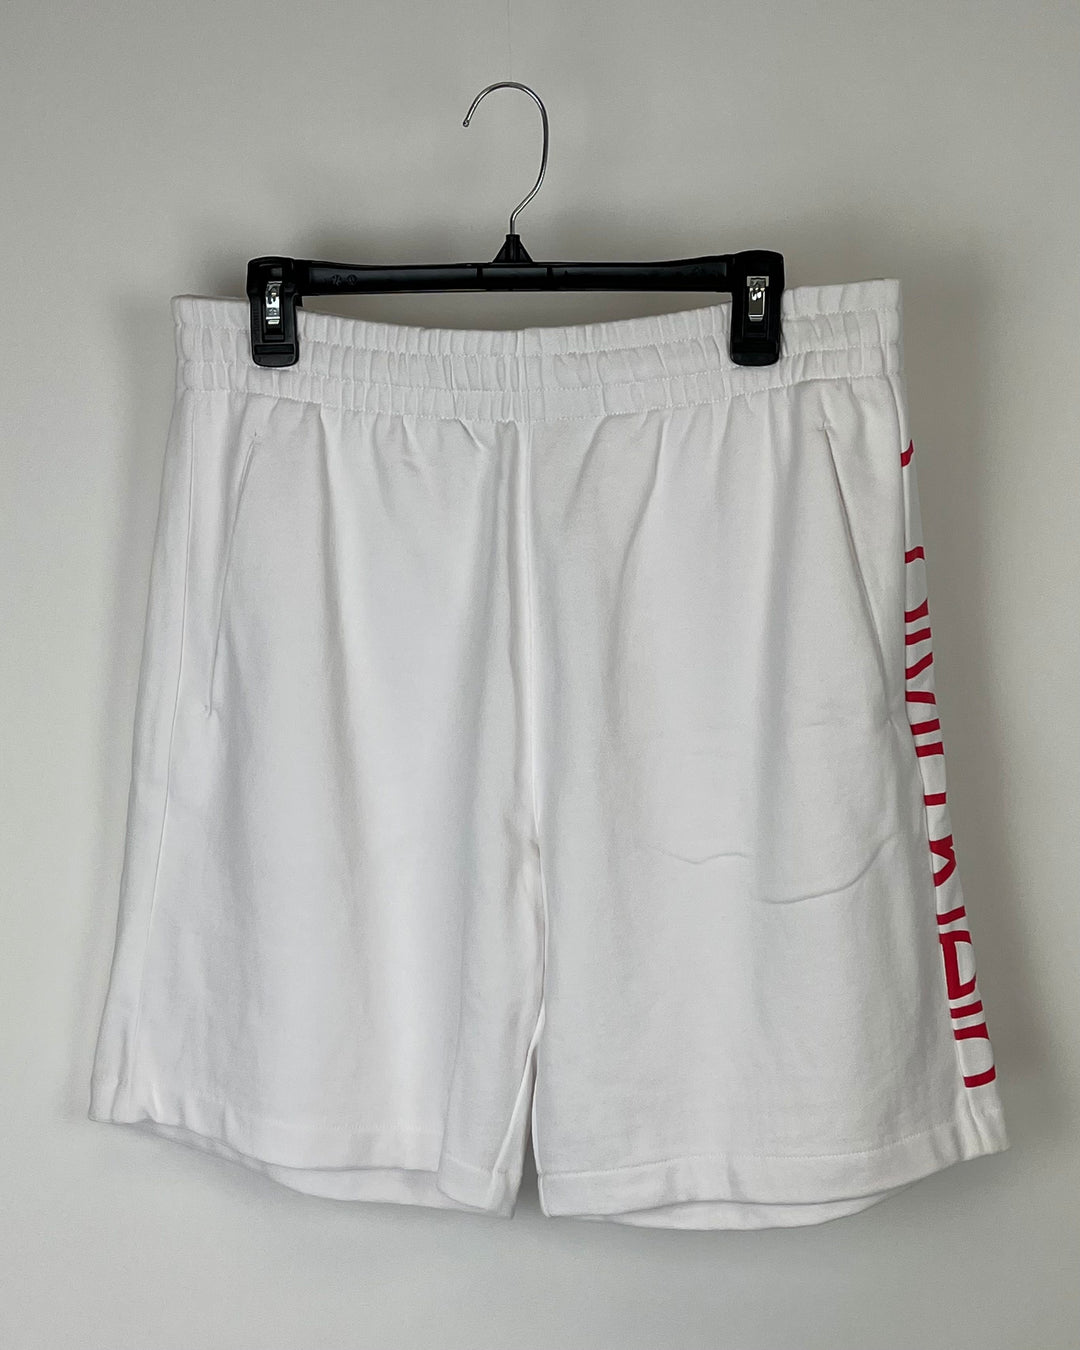 MENS White Shorts with Red Logo - Medium